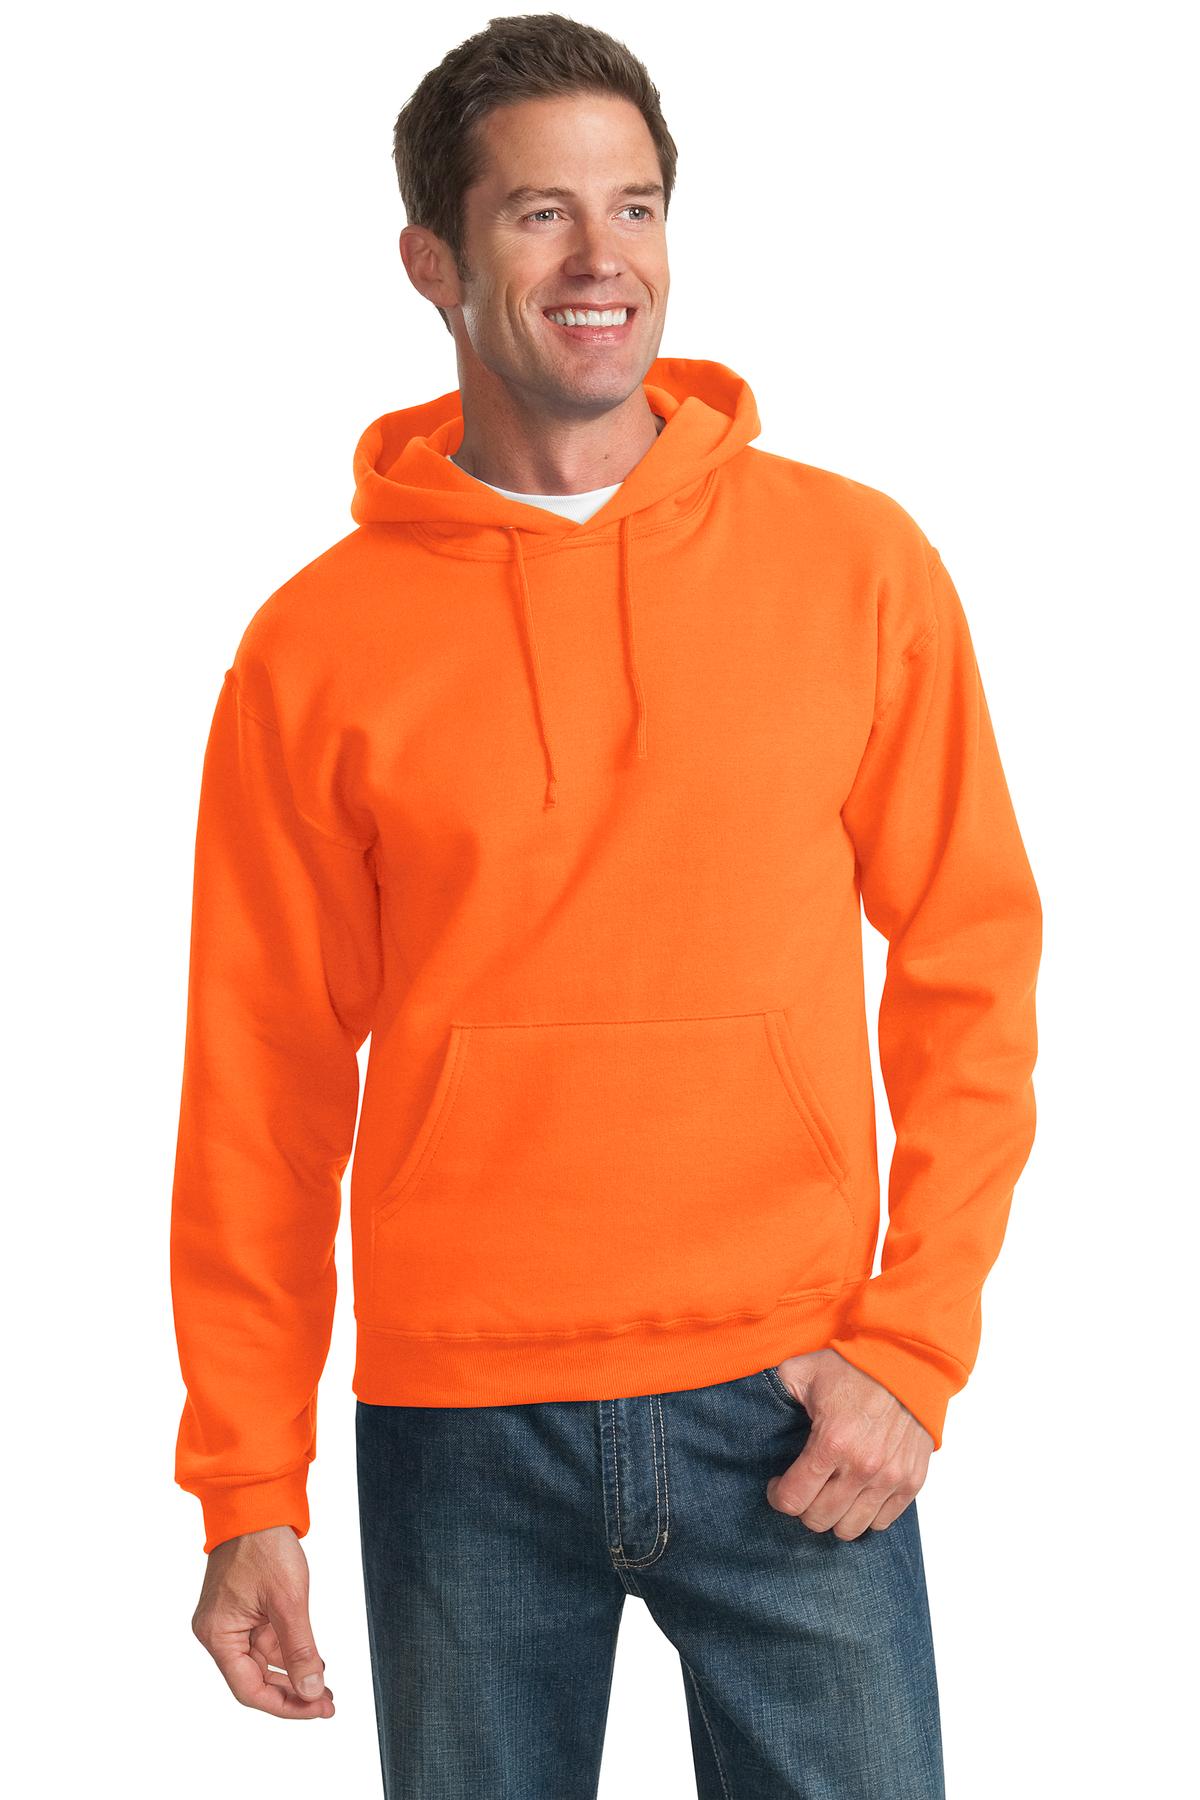 JERZEES® - NuBlend® Pullover Hooded Sweatshirt. 996M [Safety Orange] - DFW Impression